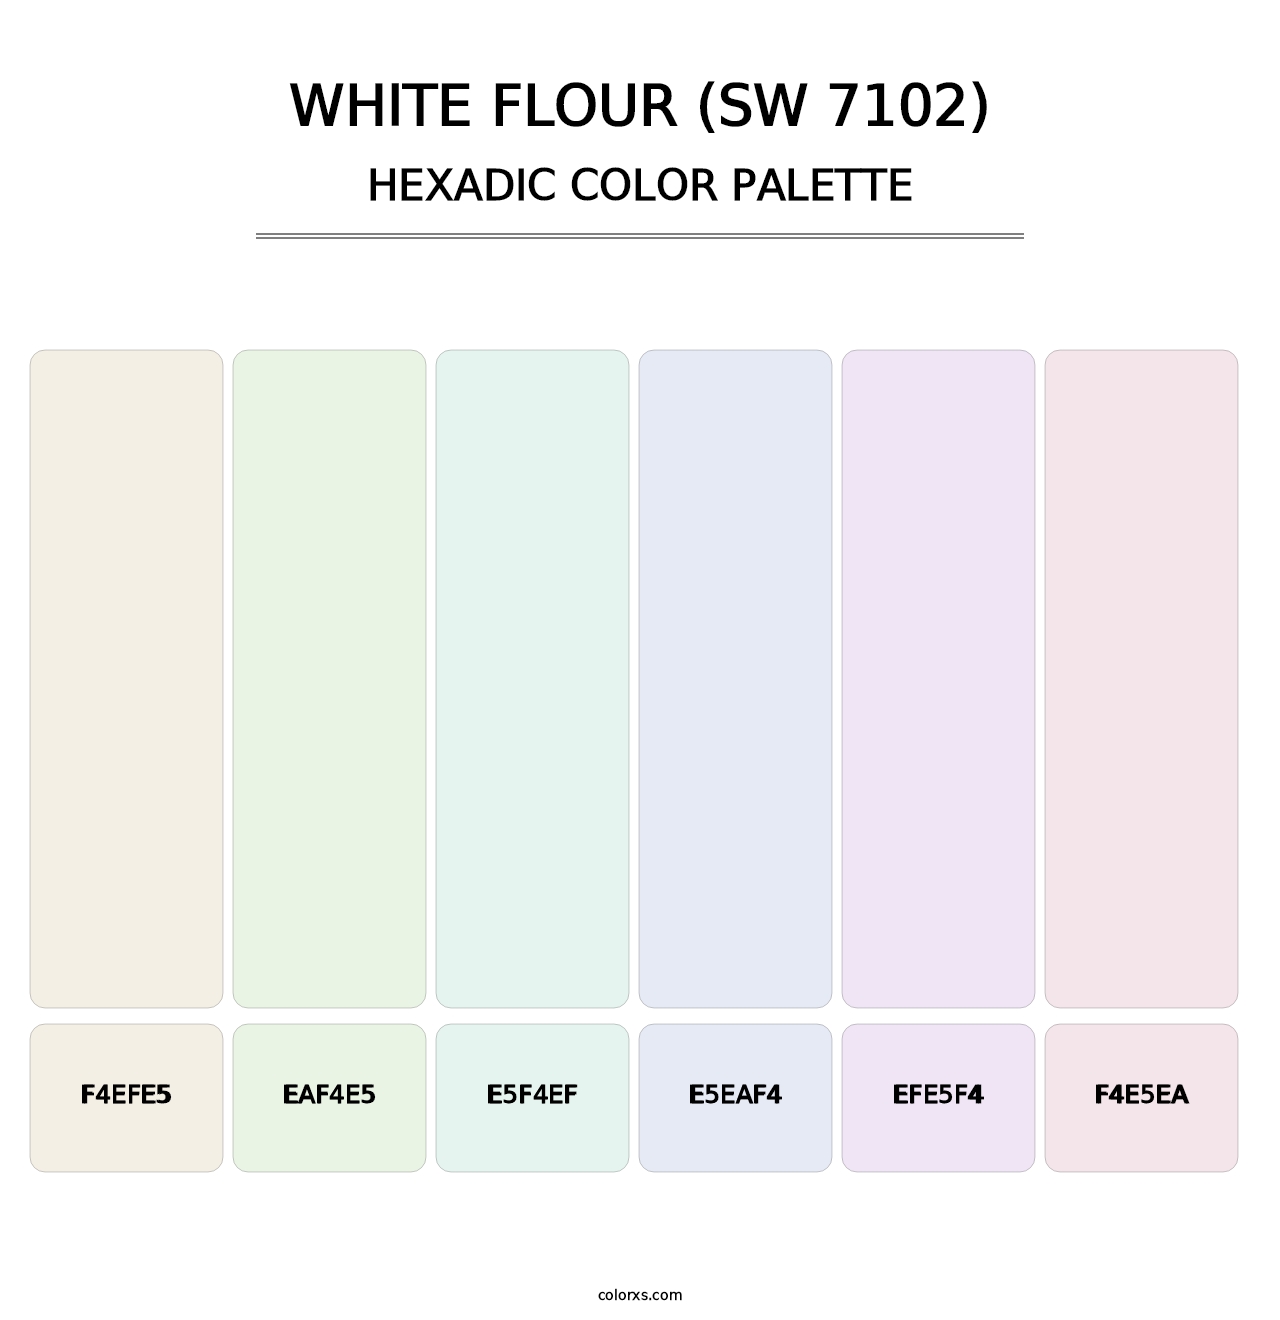 White Flour (SW 7102) - Hexadic Color Palette